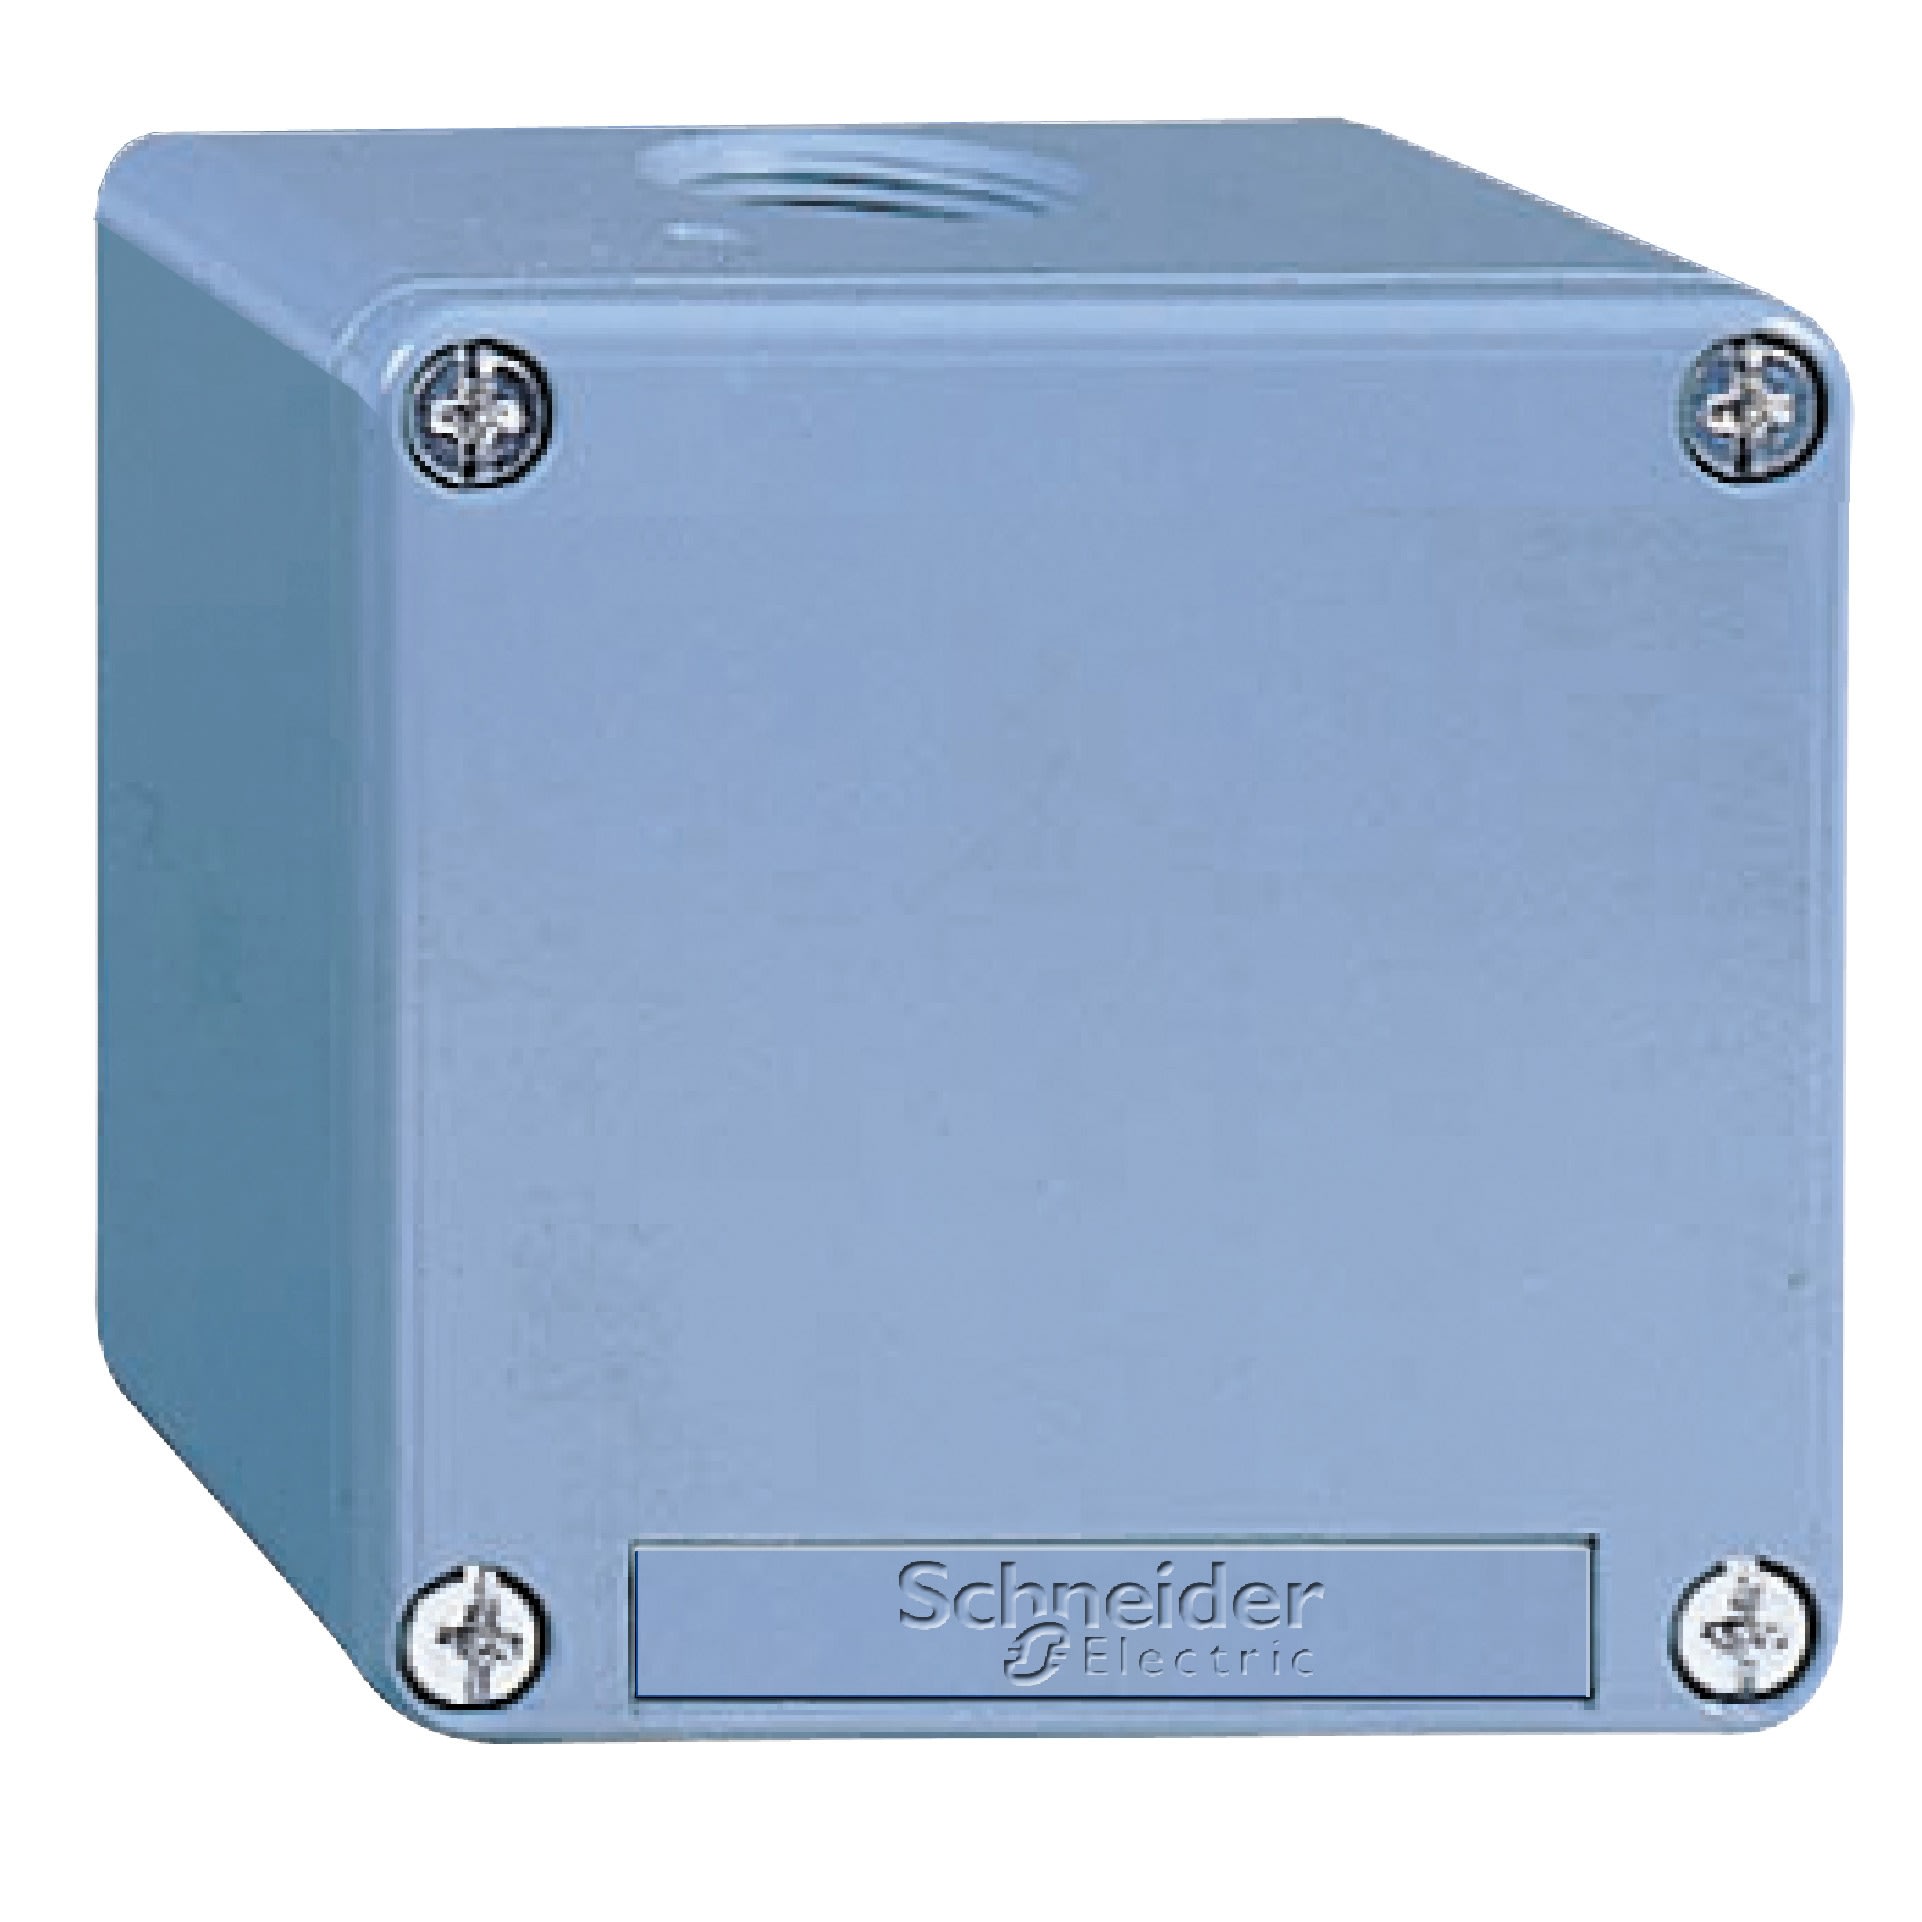 Schneider Electric - Harmony XAPM - boite a boutons vide - metallique - sans percage